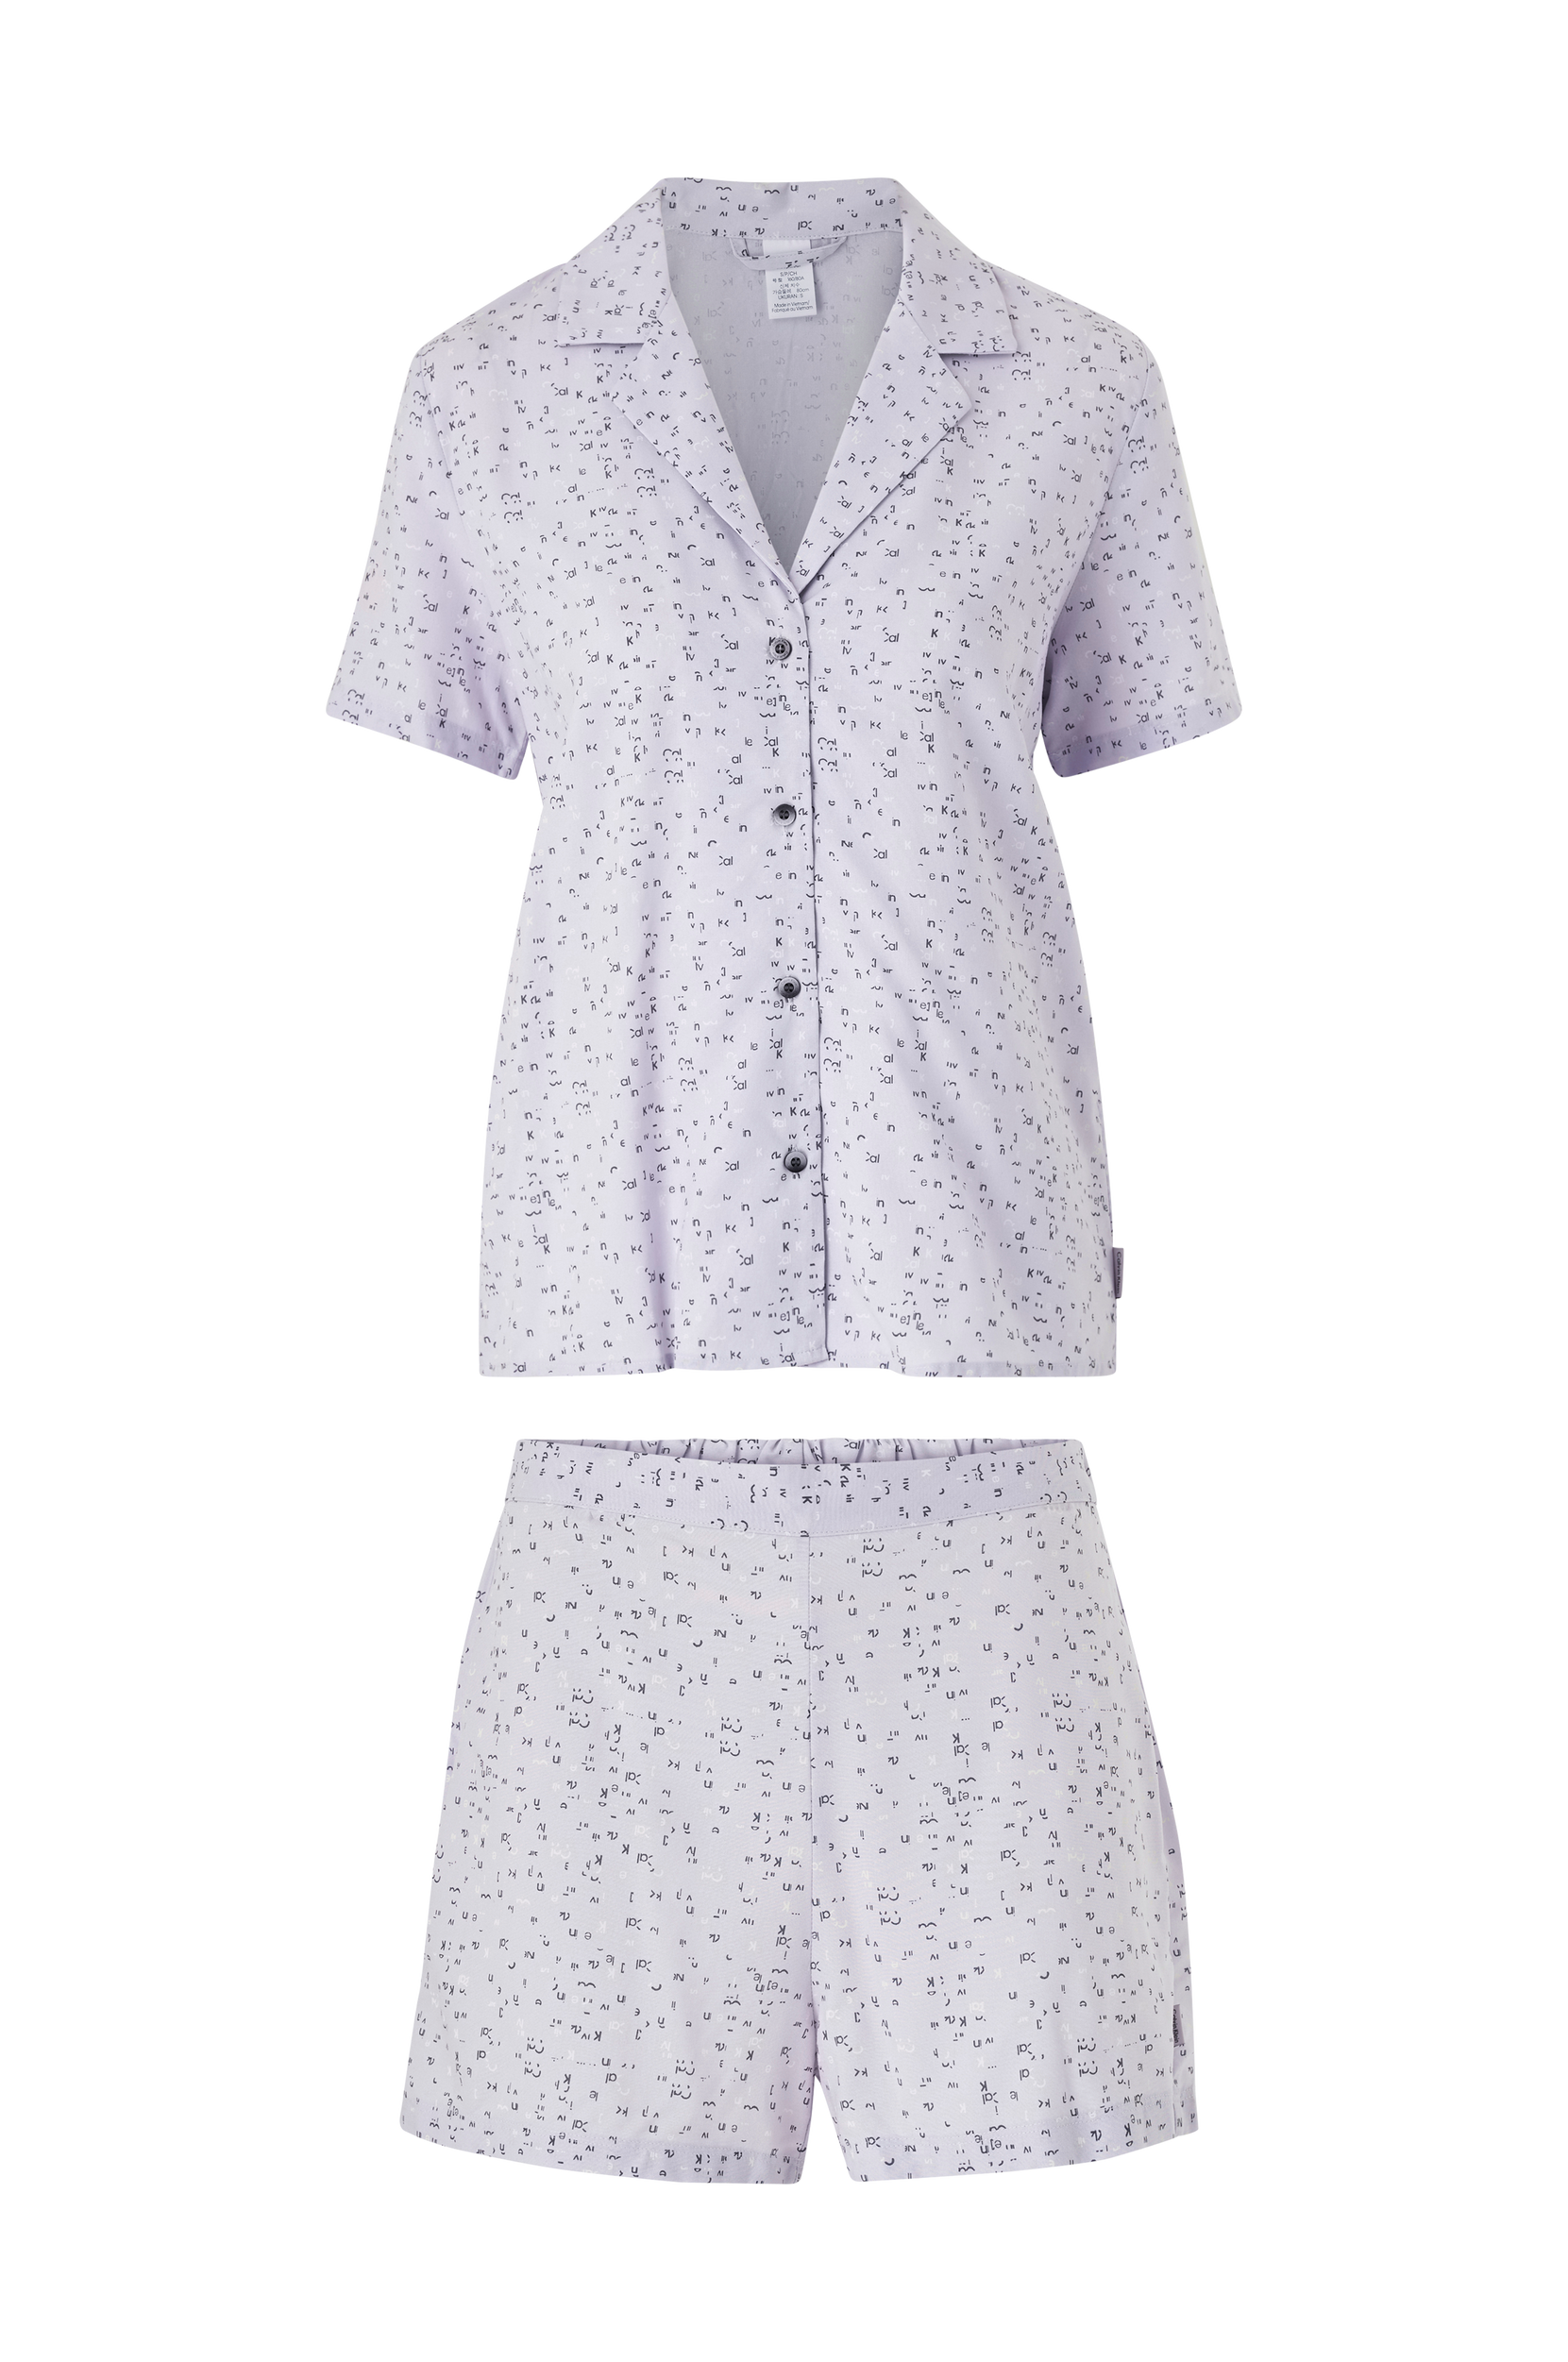 Calvin Klein Underwear - Pyjamas Woven Short Set - Blå - 42/44